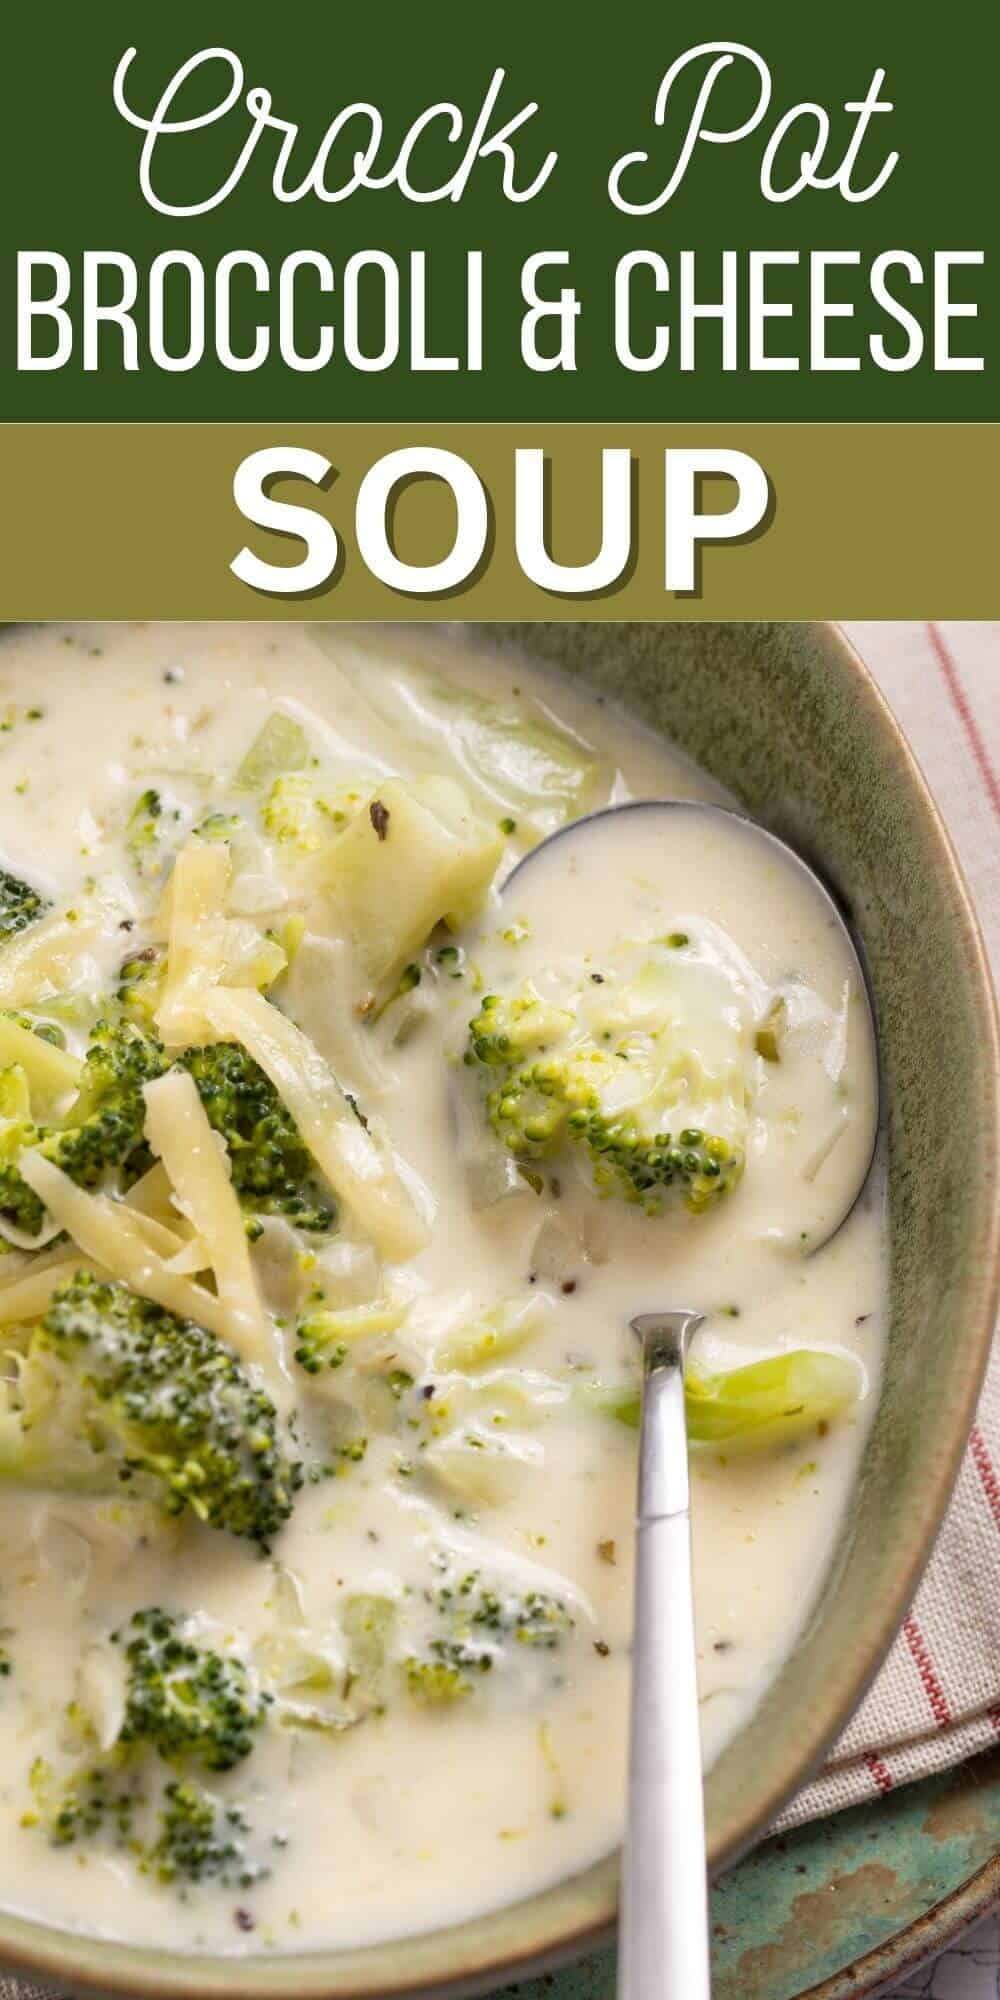 Crock pot broccoli and cheese soup.